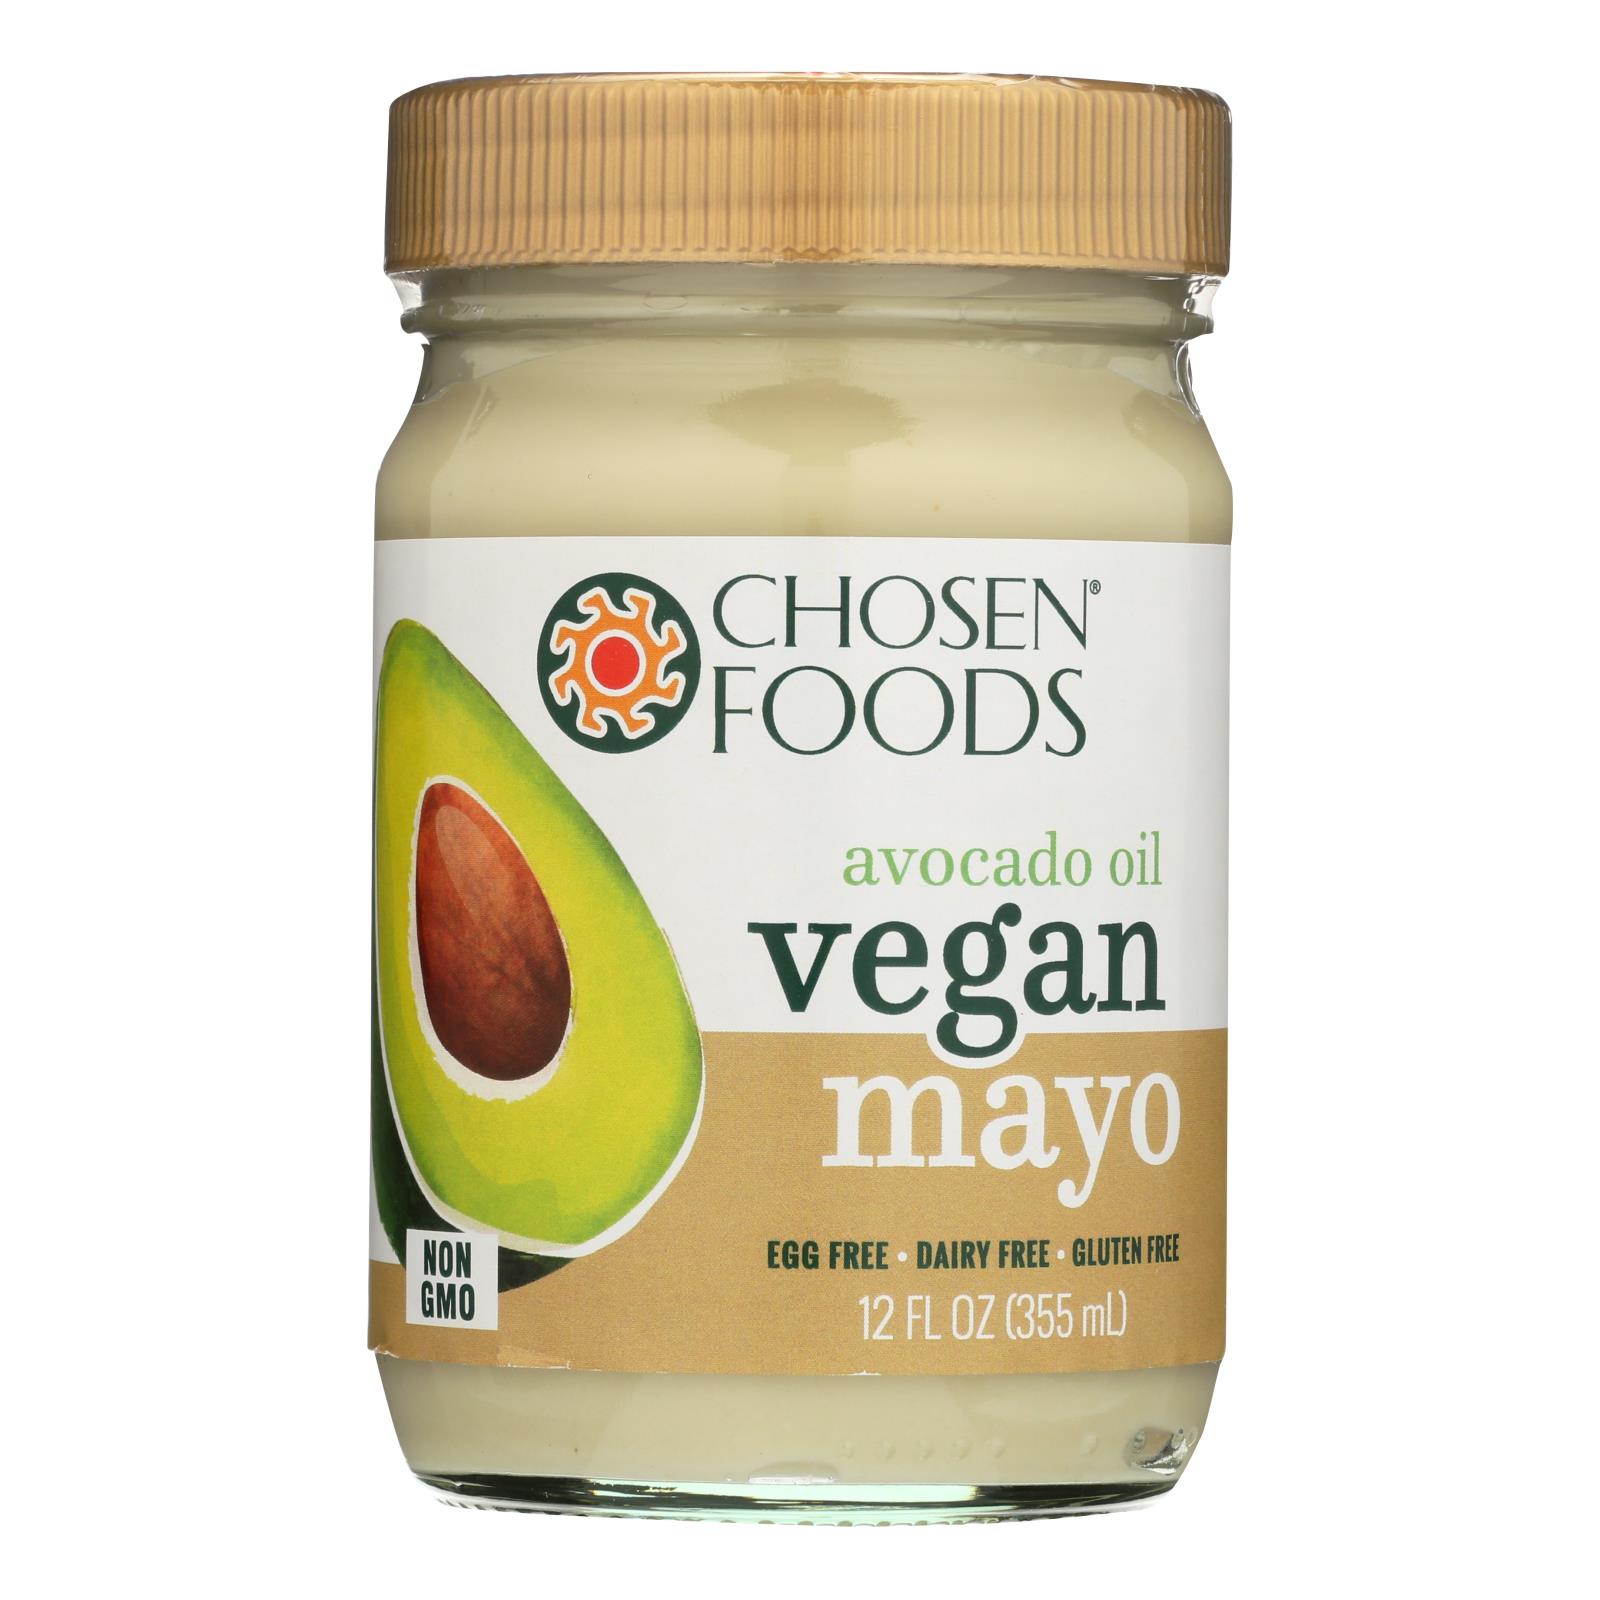 Chosen Foods - Avocado Oil Vegan Mayo - 6개 묶음상품 - 12 oz.